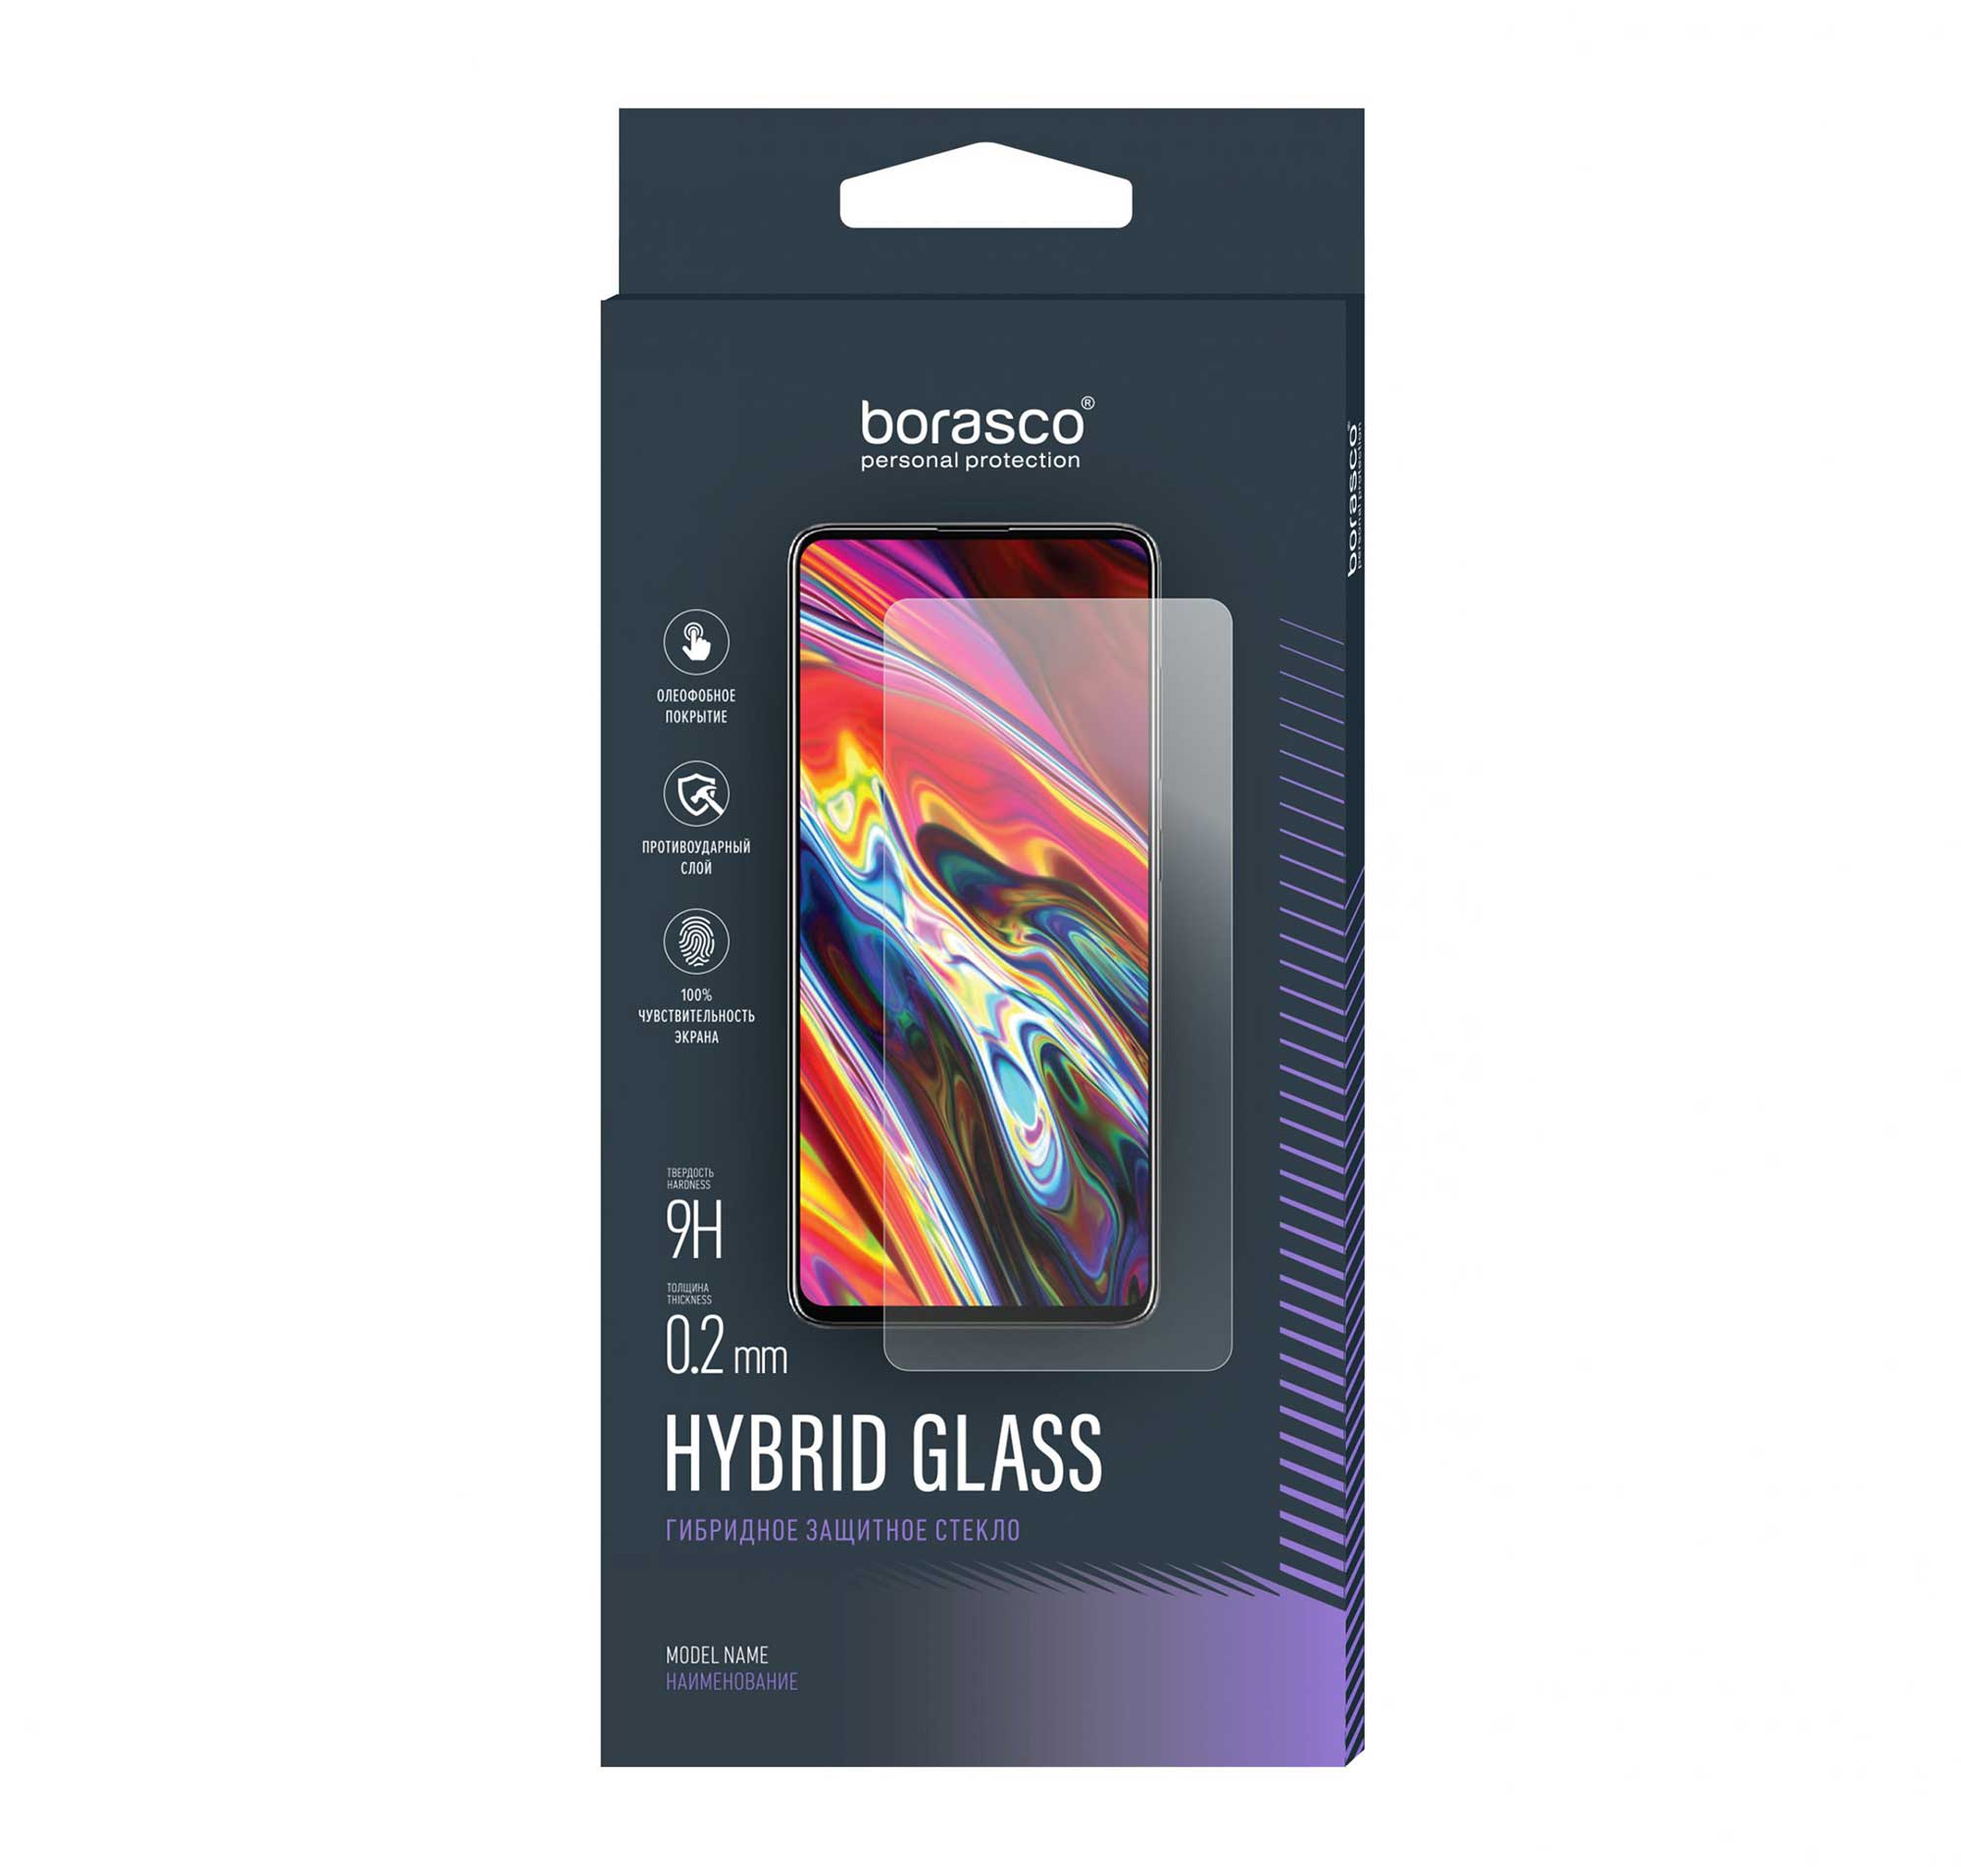 Защитное стекло Hybrid Glass для Itel A48 чехол mypads крутая пандочка ок для itel a48 задняя панель накладка бампер